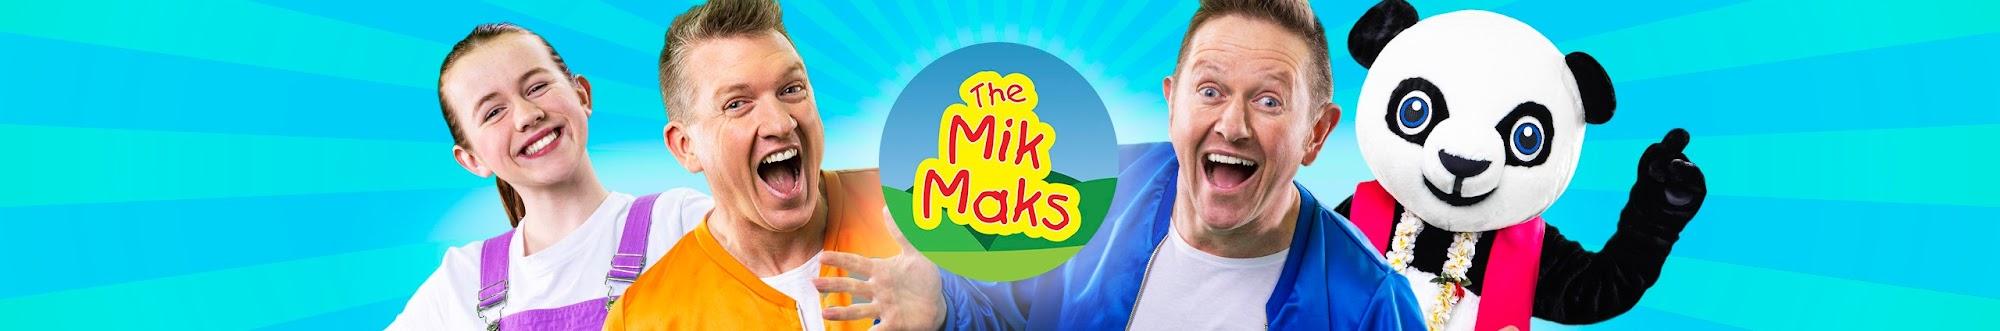 The Mik Maks